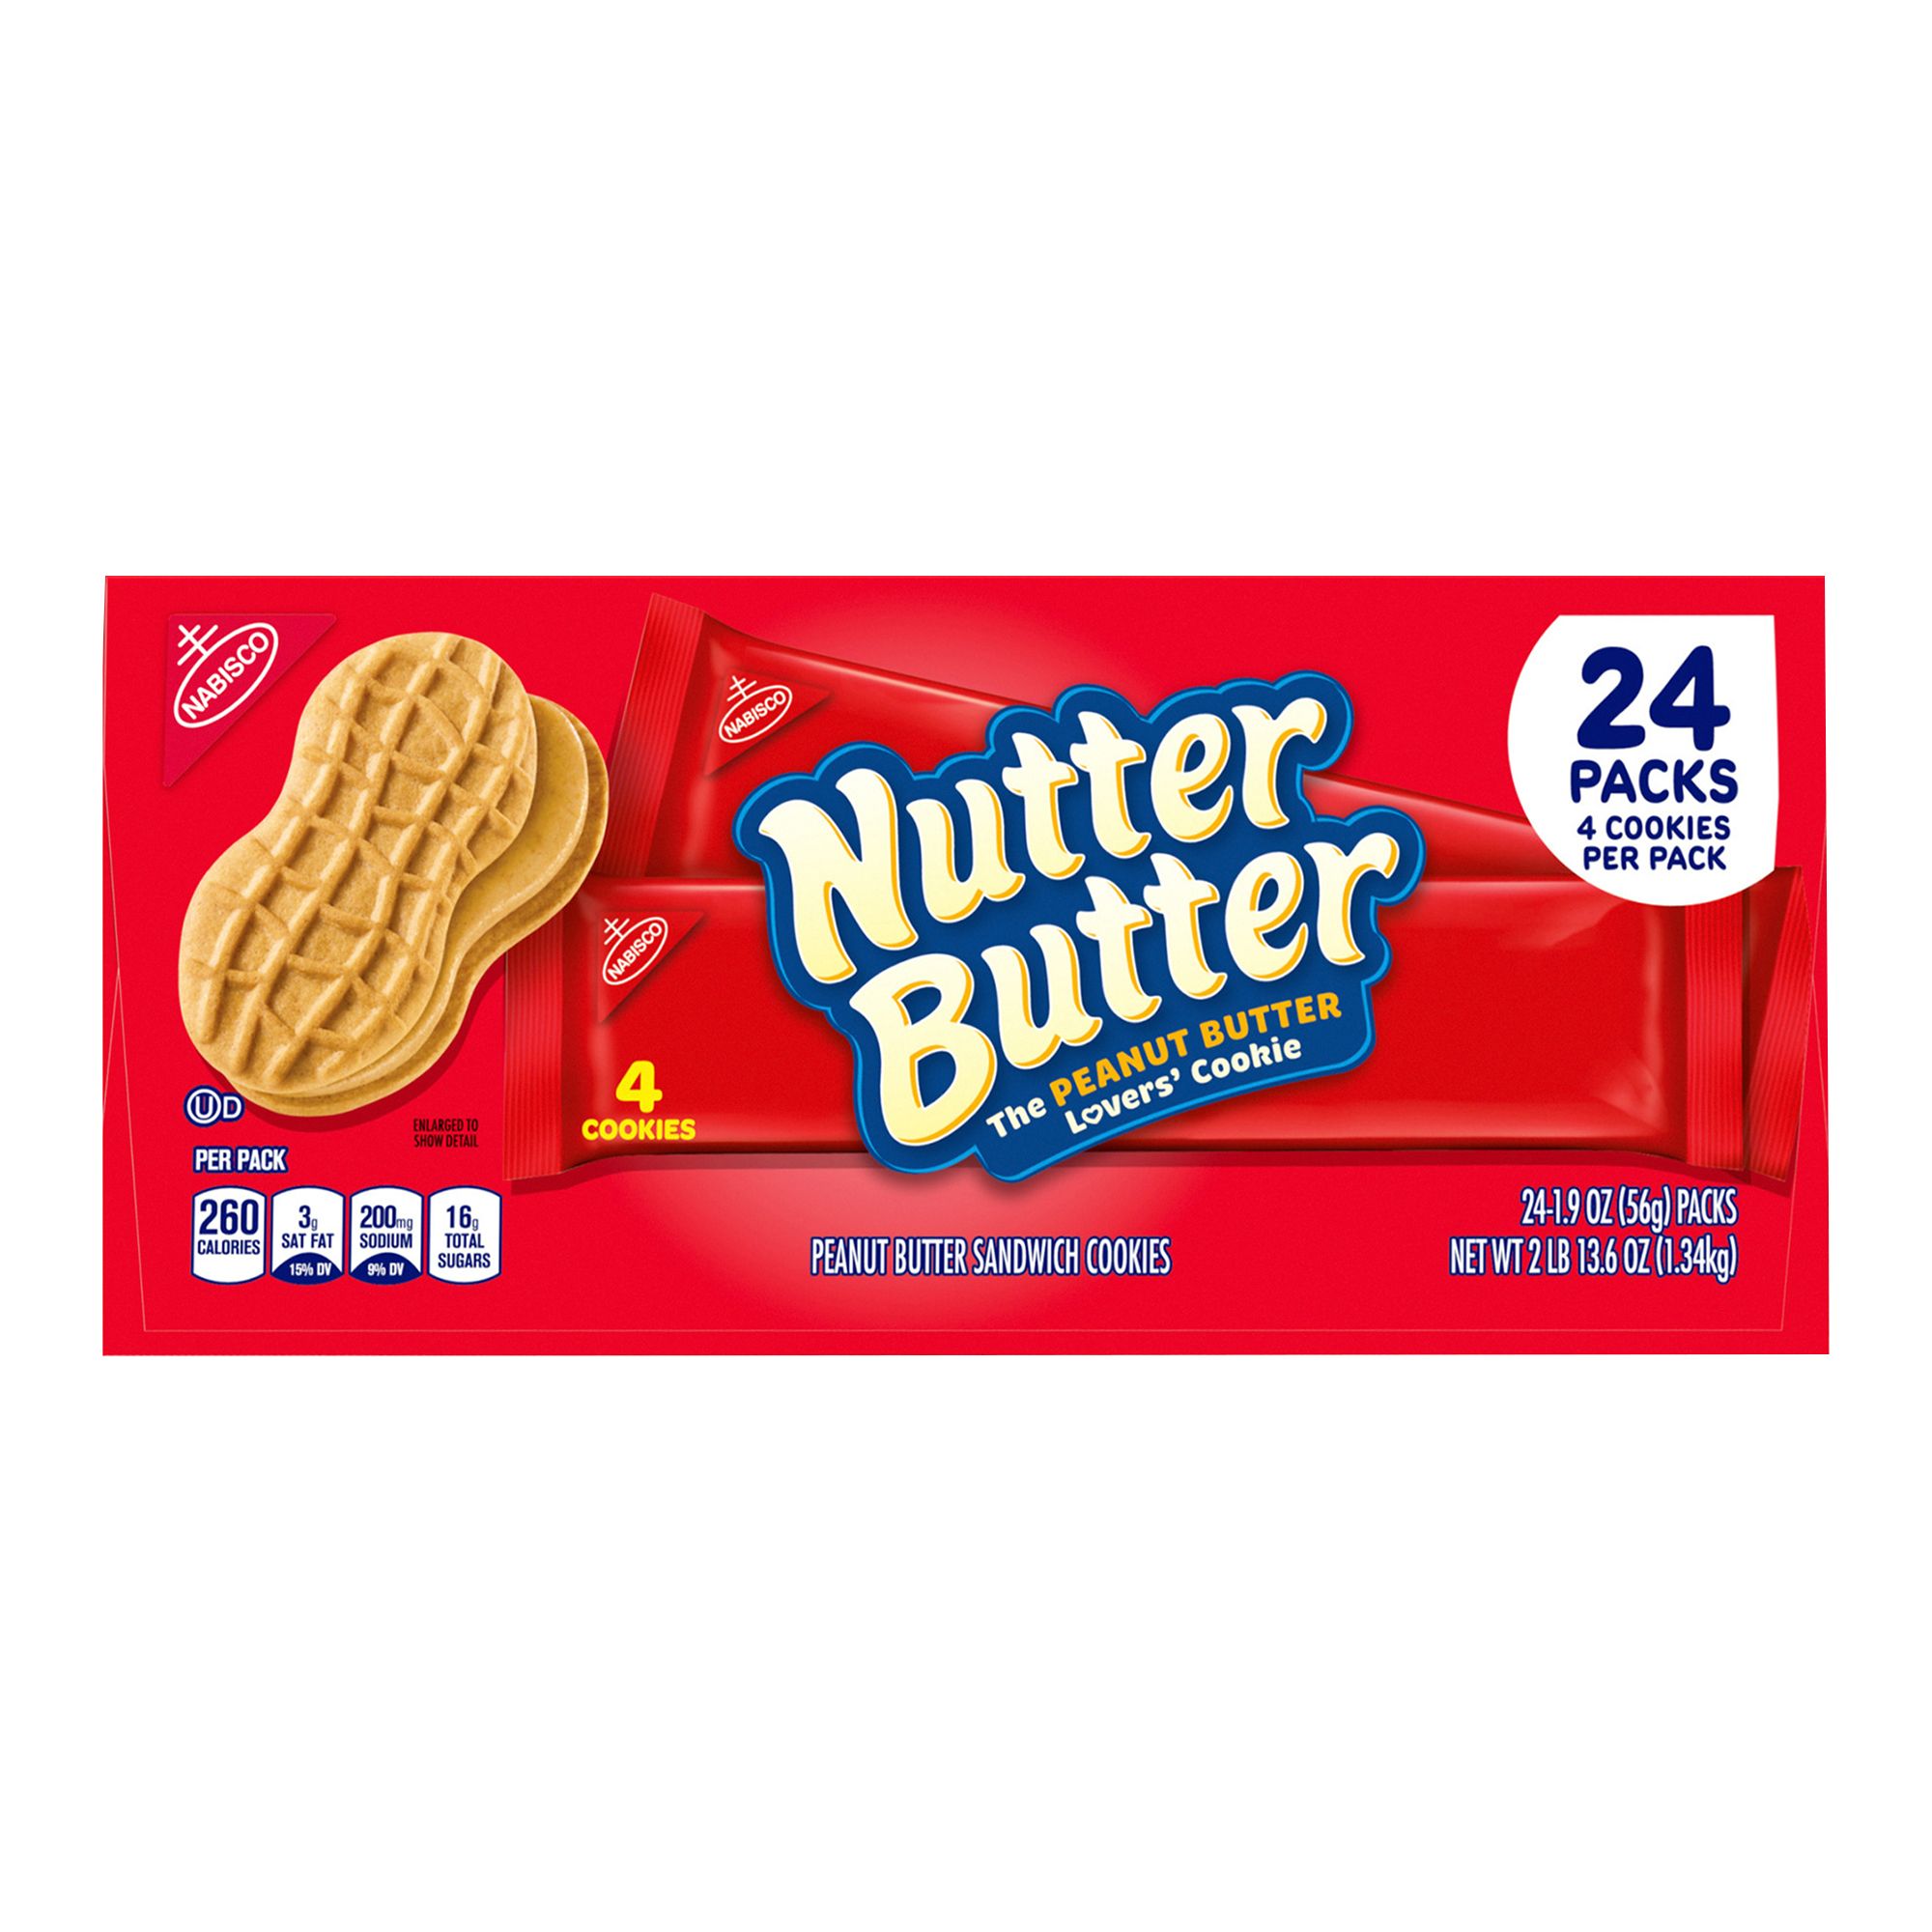 M & M Bulk M&M's Peanut Butter in Sealed Bag 5 lbs